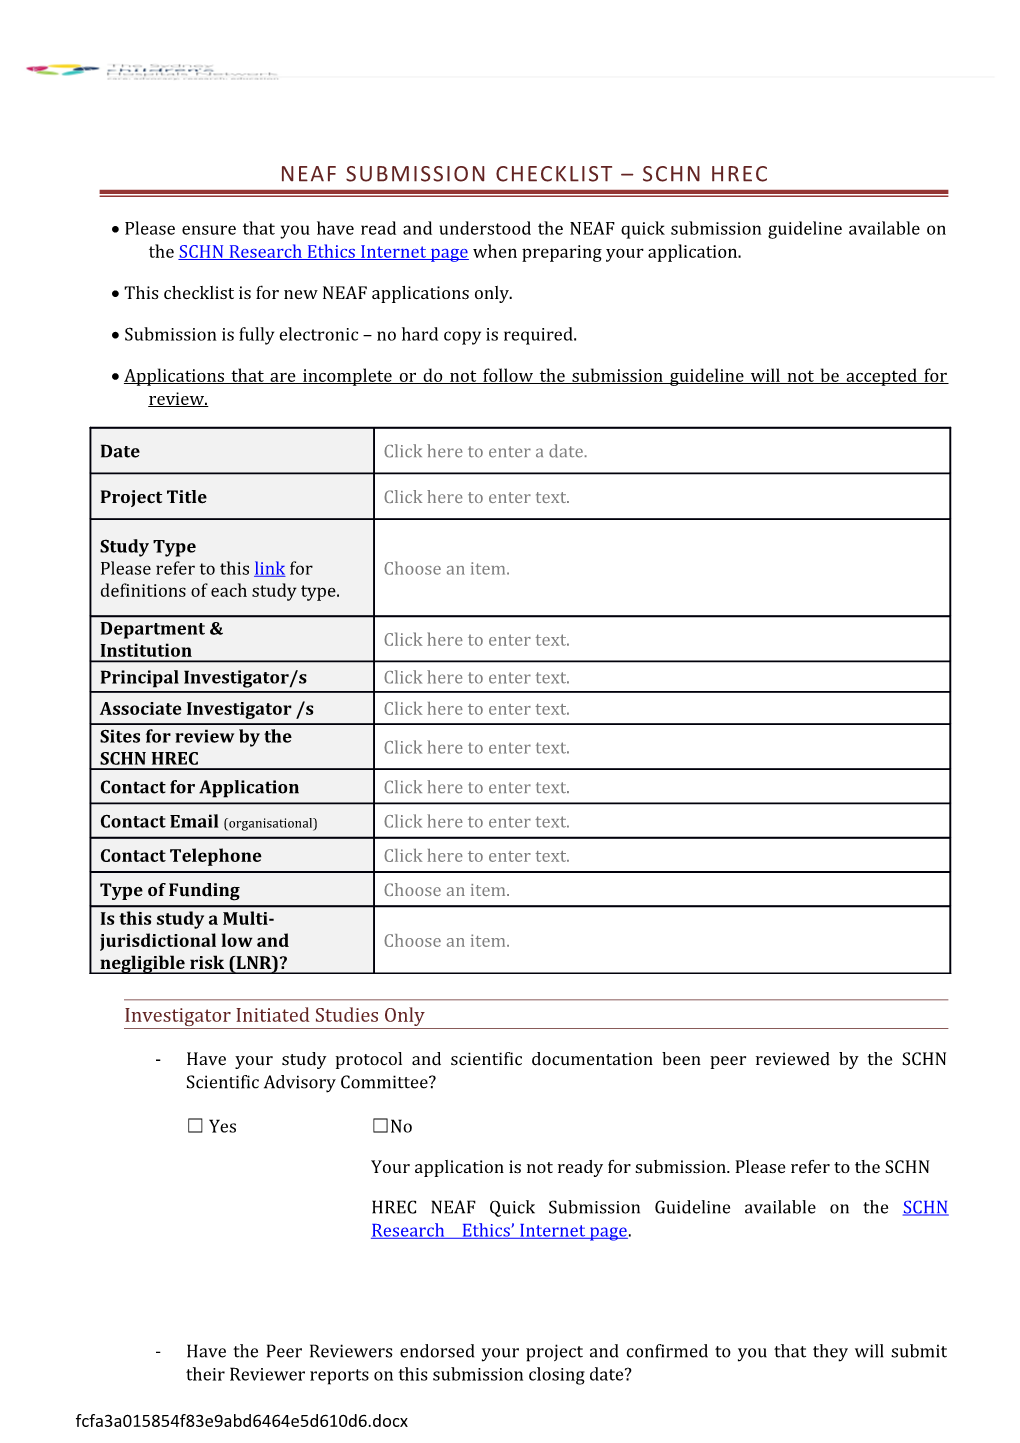 NEAF Submission Checklist SCHN HREC